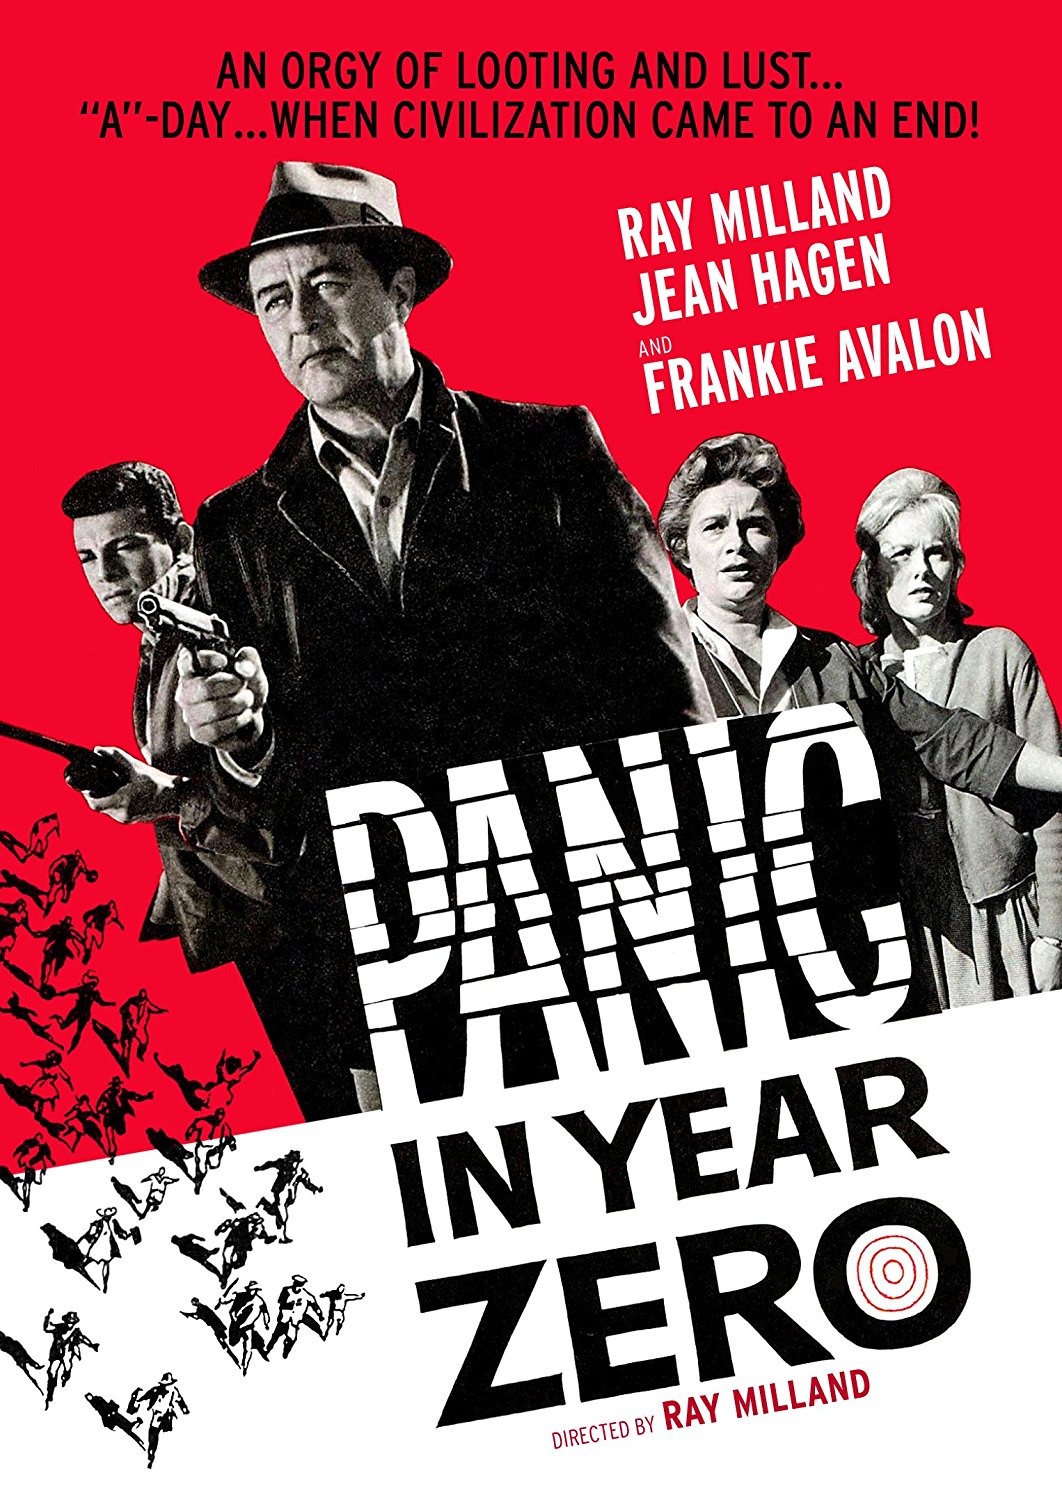 Panic in the Year Zero, starring Ray Milland, Jean Hagen, Frankie Avalon